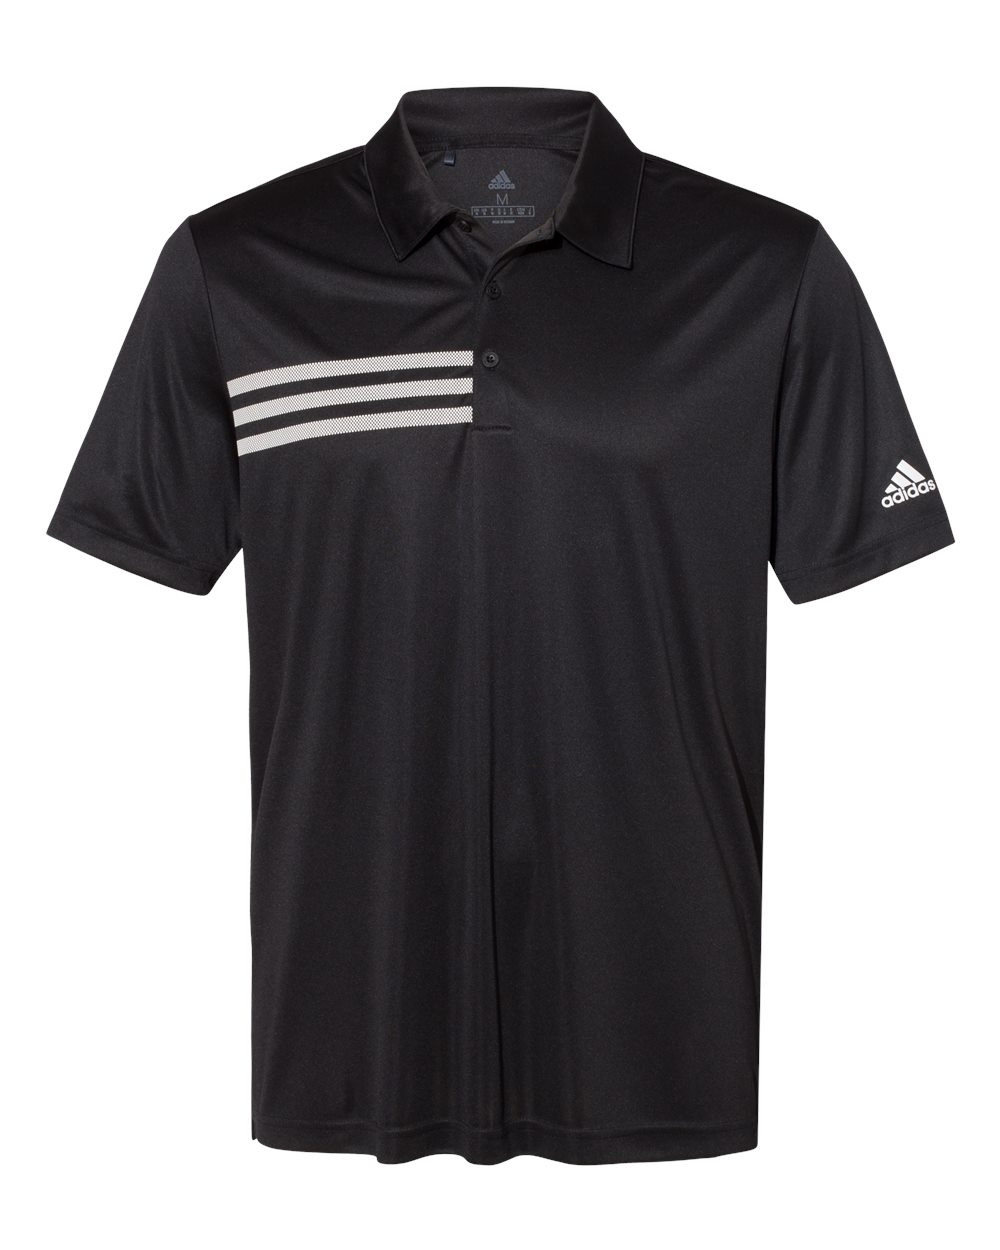 Adidas A324 - 3-Stripes Chest Sport Shirt